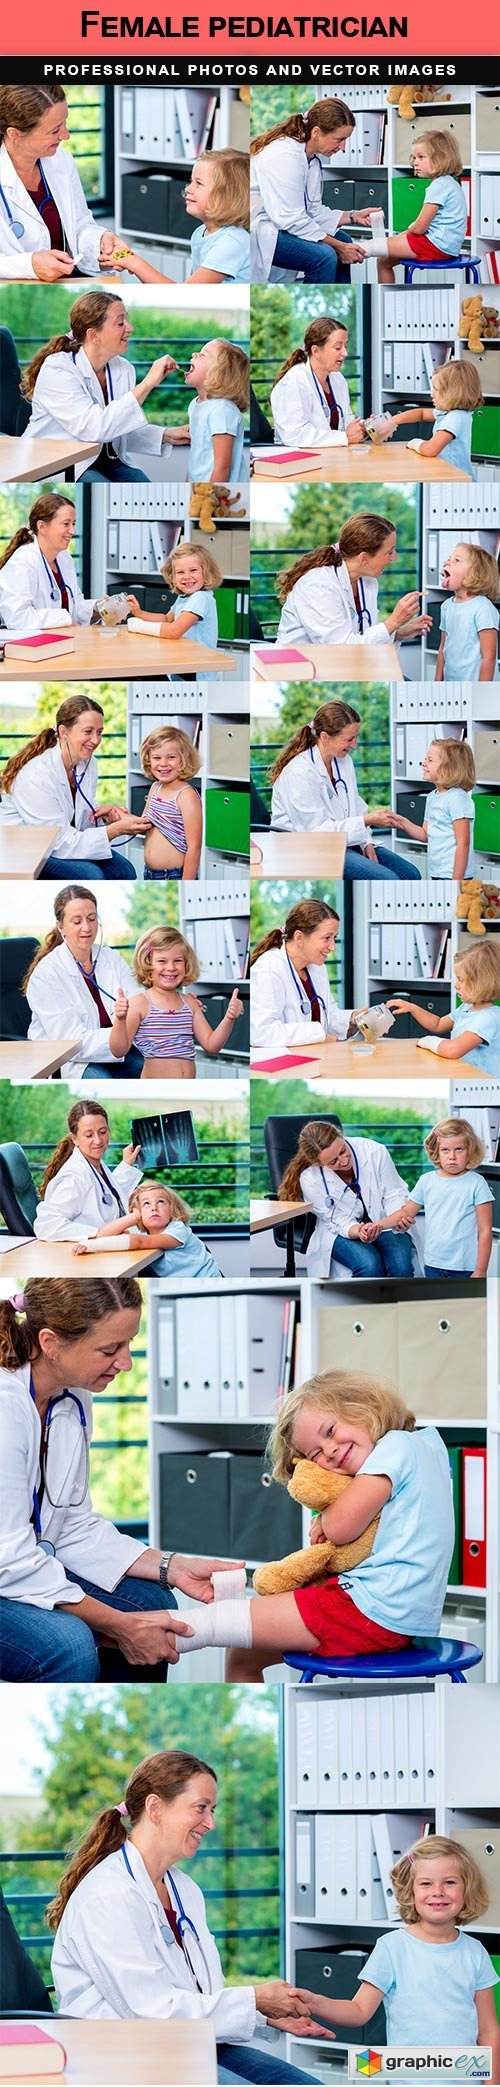 Female pediatrician